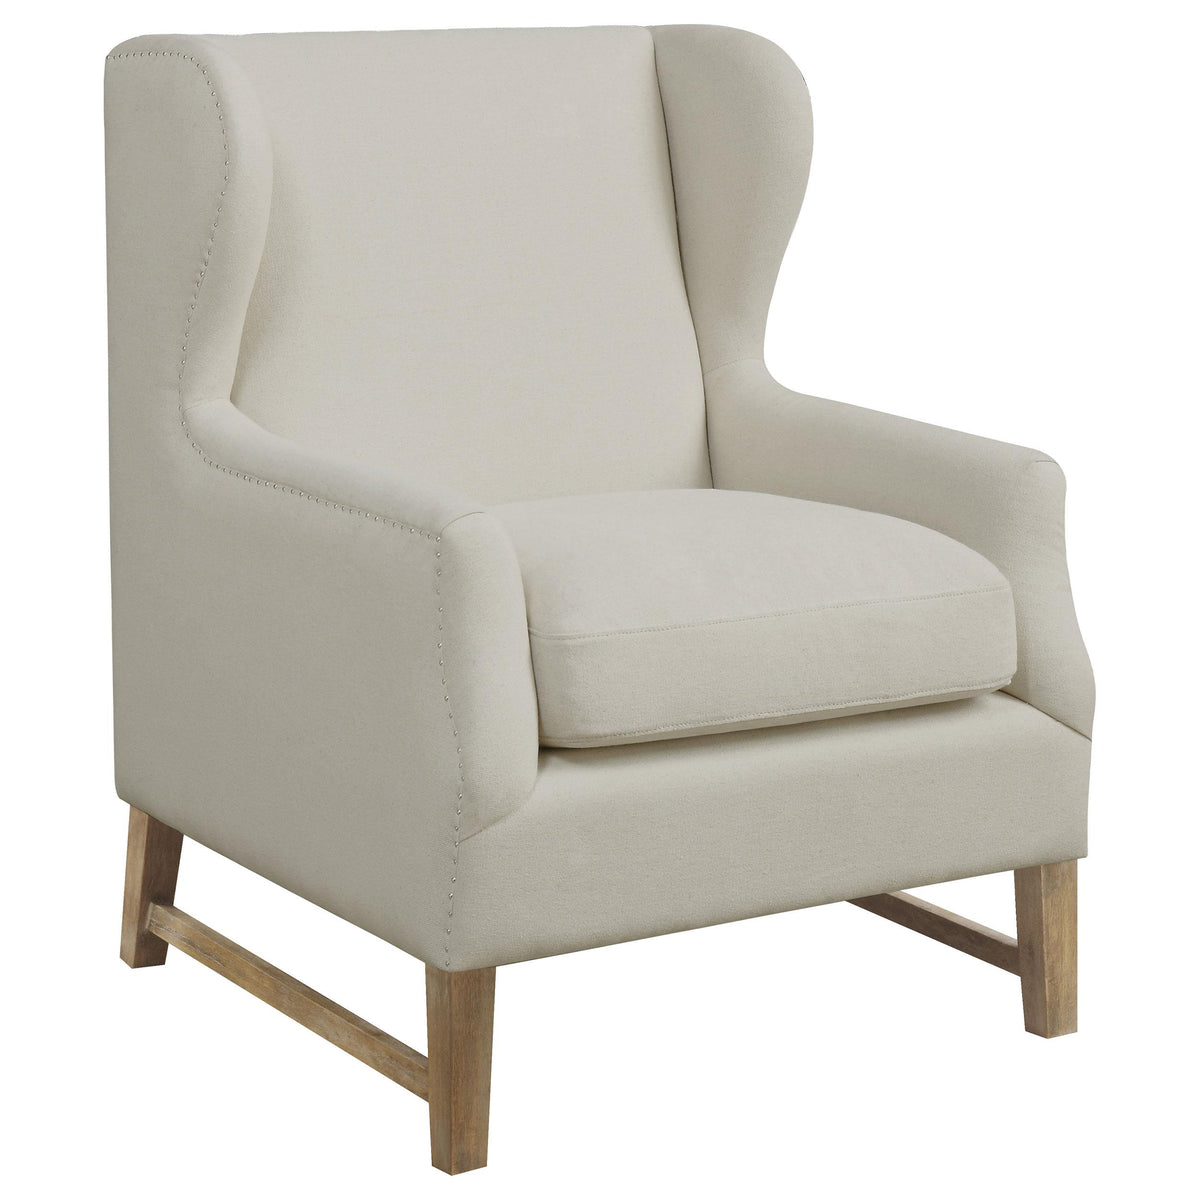 Fleur Wing Back Accent Chair Cream Fleur Wing Back Accent Chair Cream Half Price Furniture